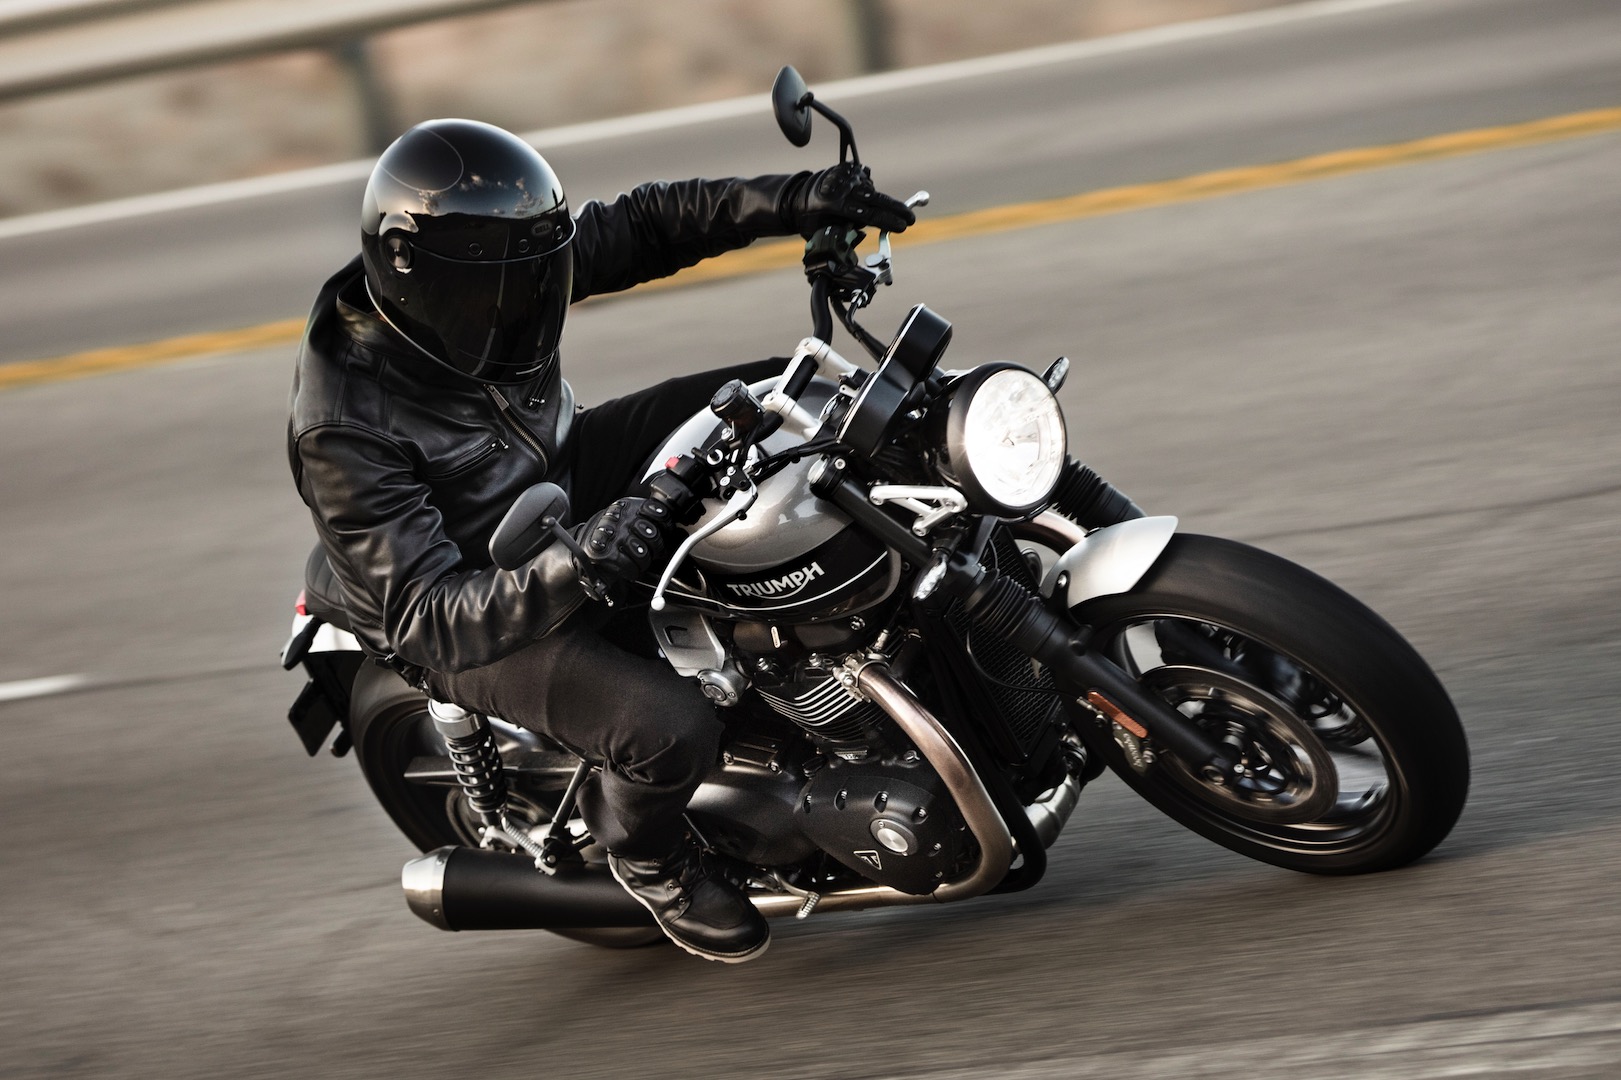 Nombre:  2019-Triumph-Speed-Twin-First-Look-retro-sport-motorcycle-8.jpg
Visitas: 57
Tamaño: 341.8 KB